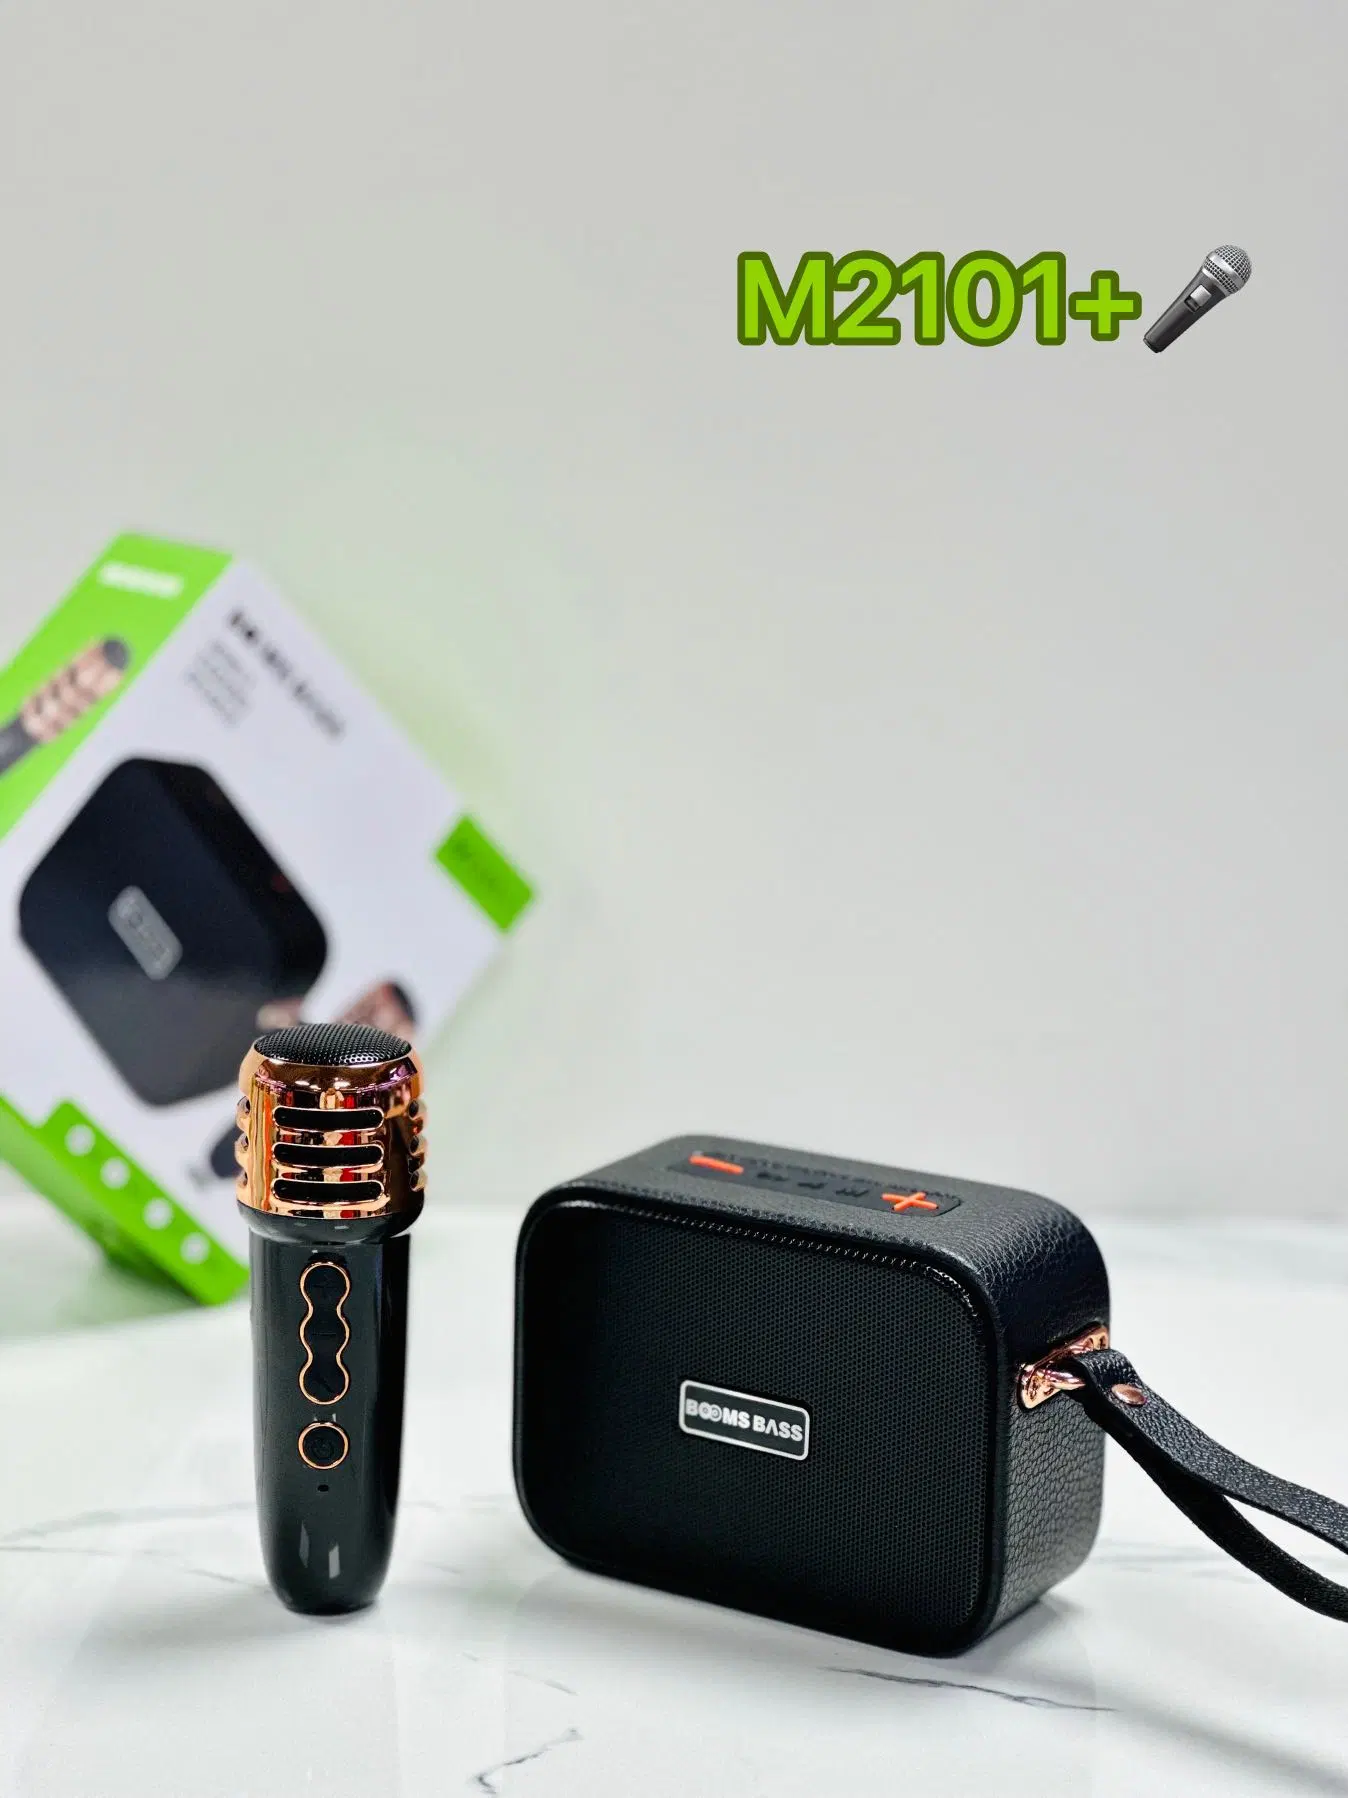 New Ld-M2101+Wireless KTV Audio Portable Strap Bluetooth Speaker Microphone Set Home KTV Karaoke_Black